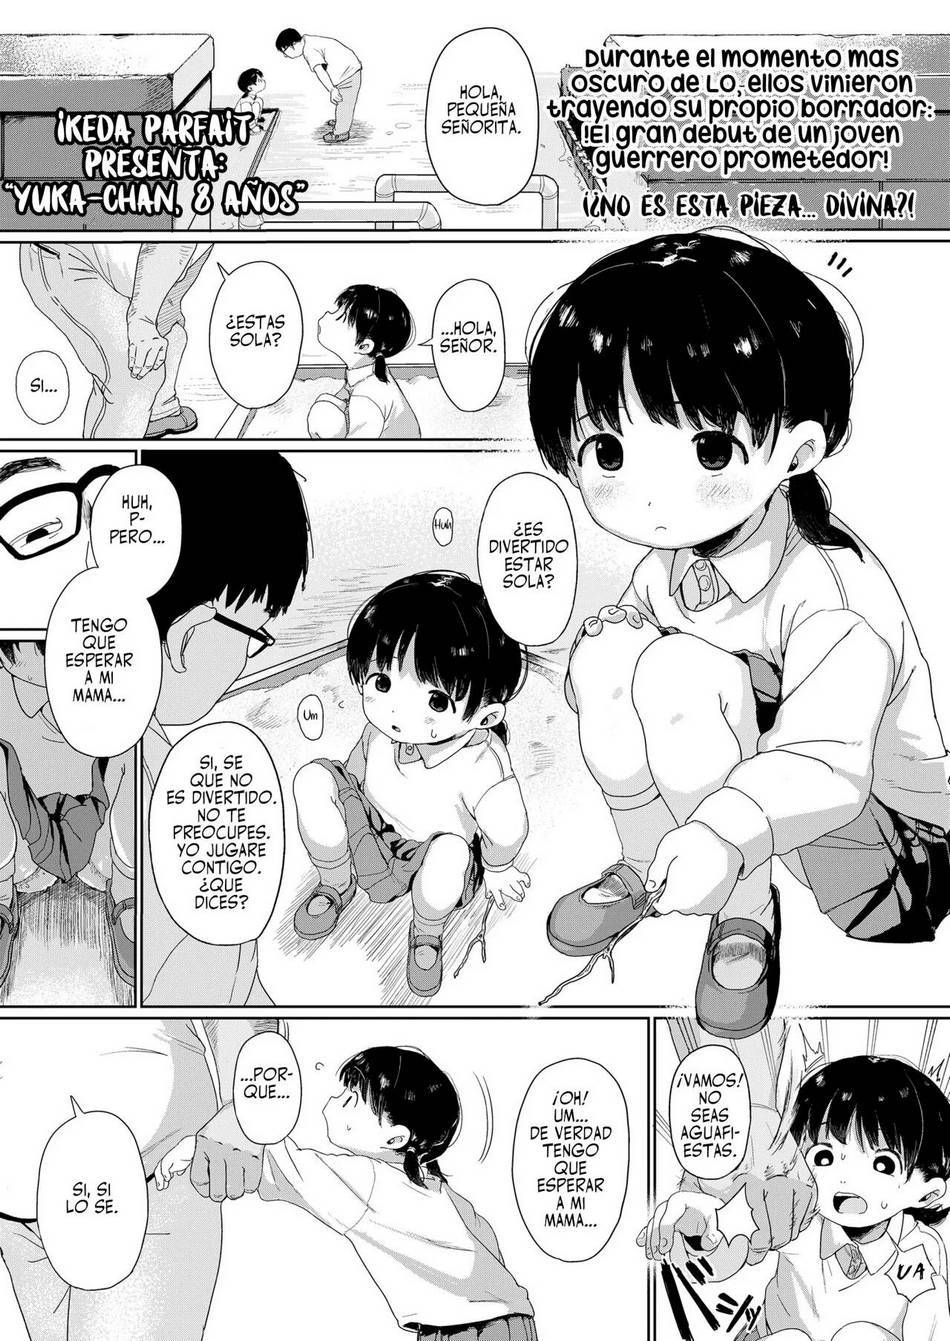 Yuka-chan (8 años) - Page #1